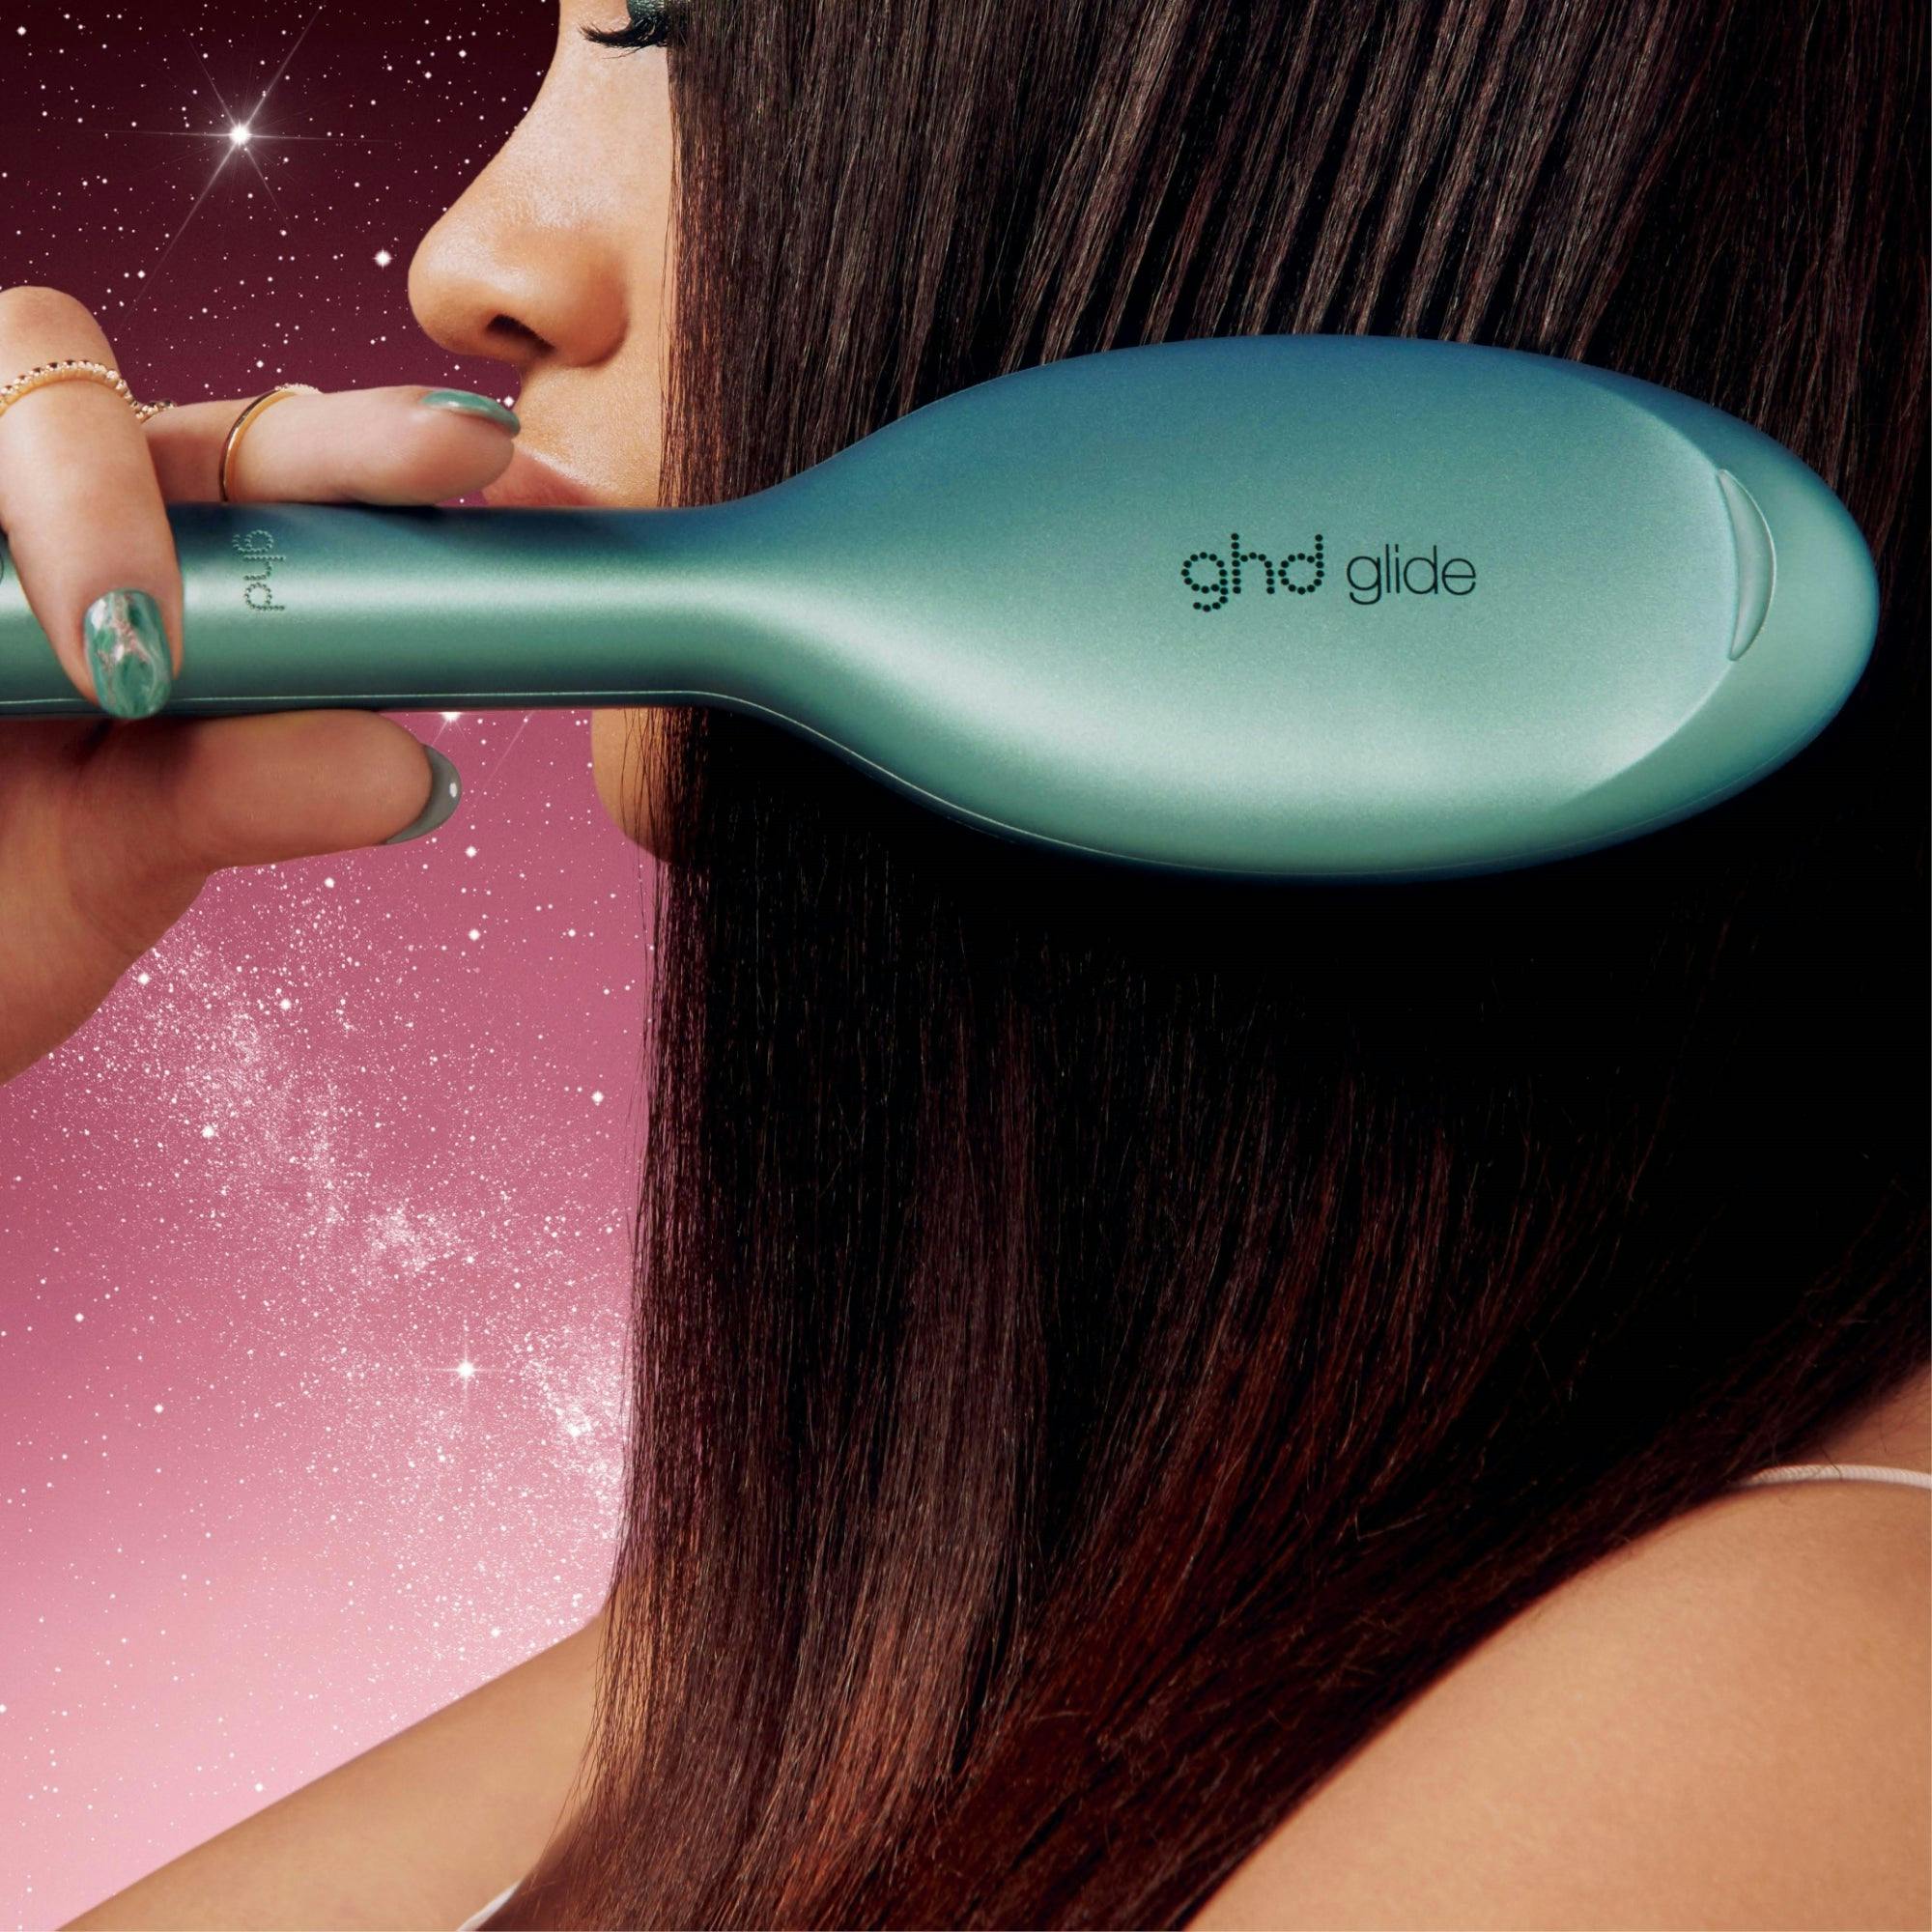 ghd Dreamland Collection Glide Hair Straightener Hot Brush In Jade Green